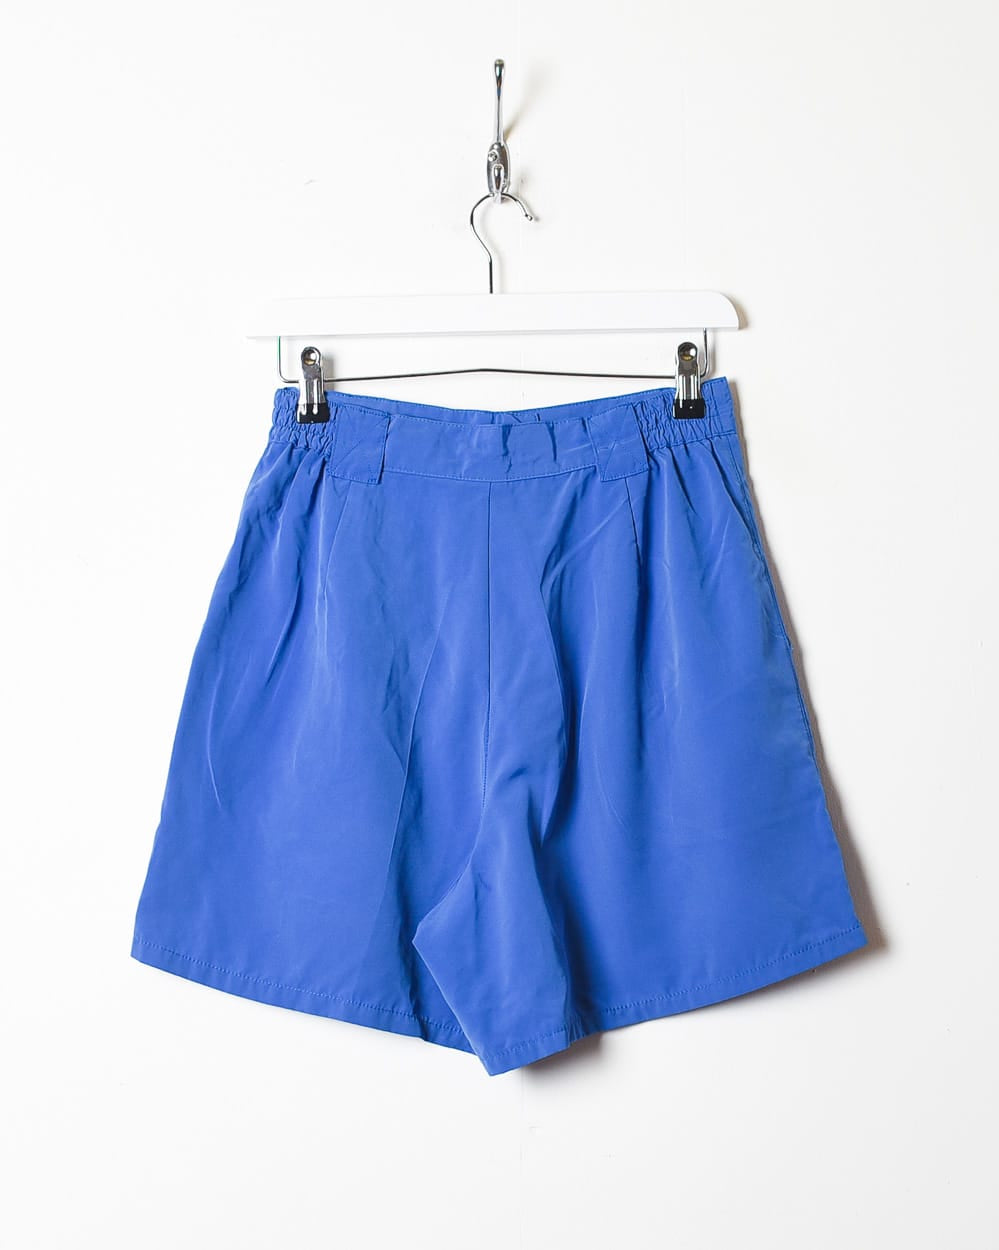 Blue Lotto Tennis Italiao Shorts - Large Women's